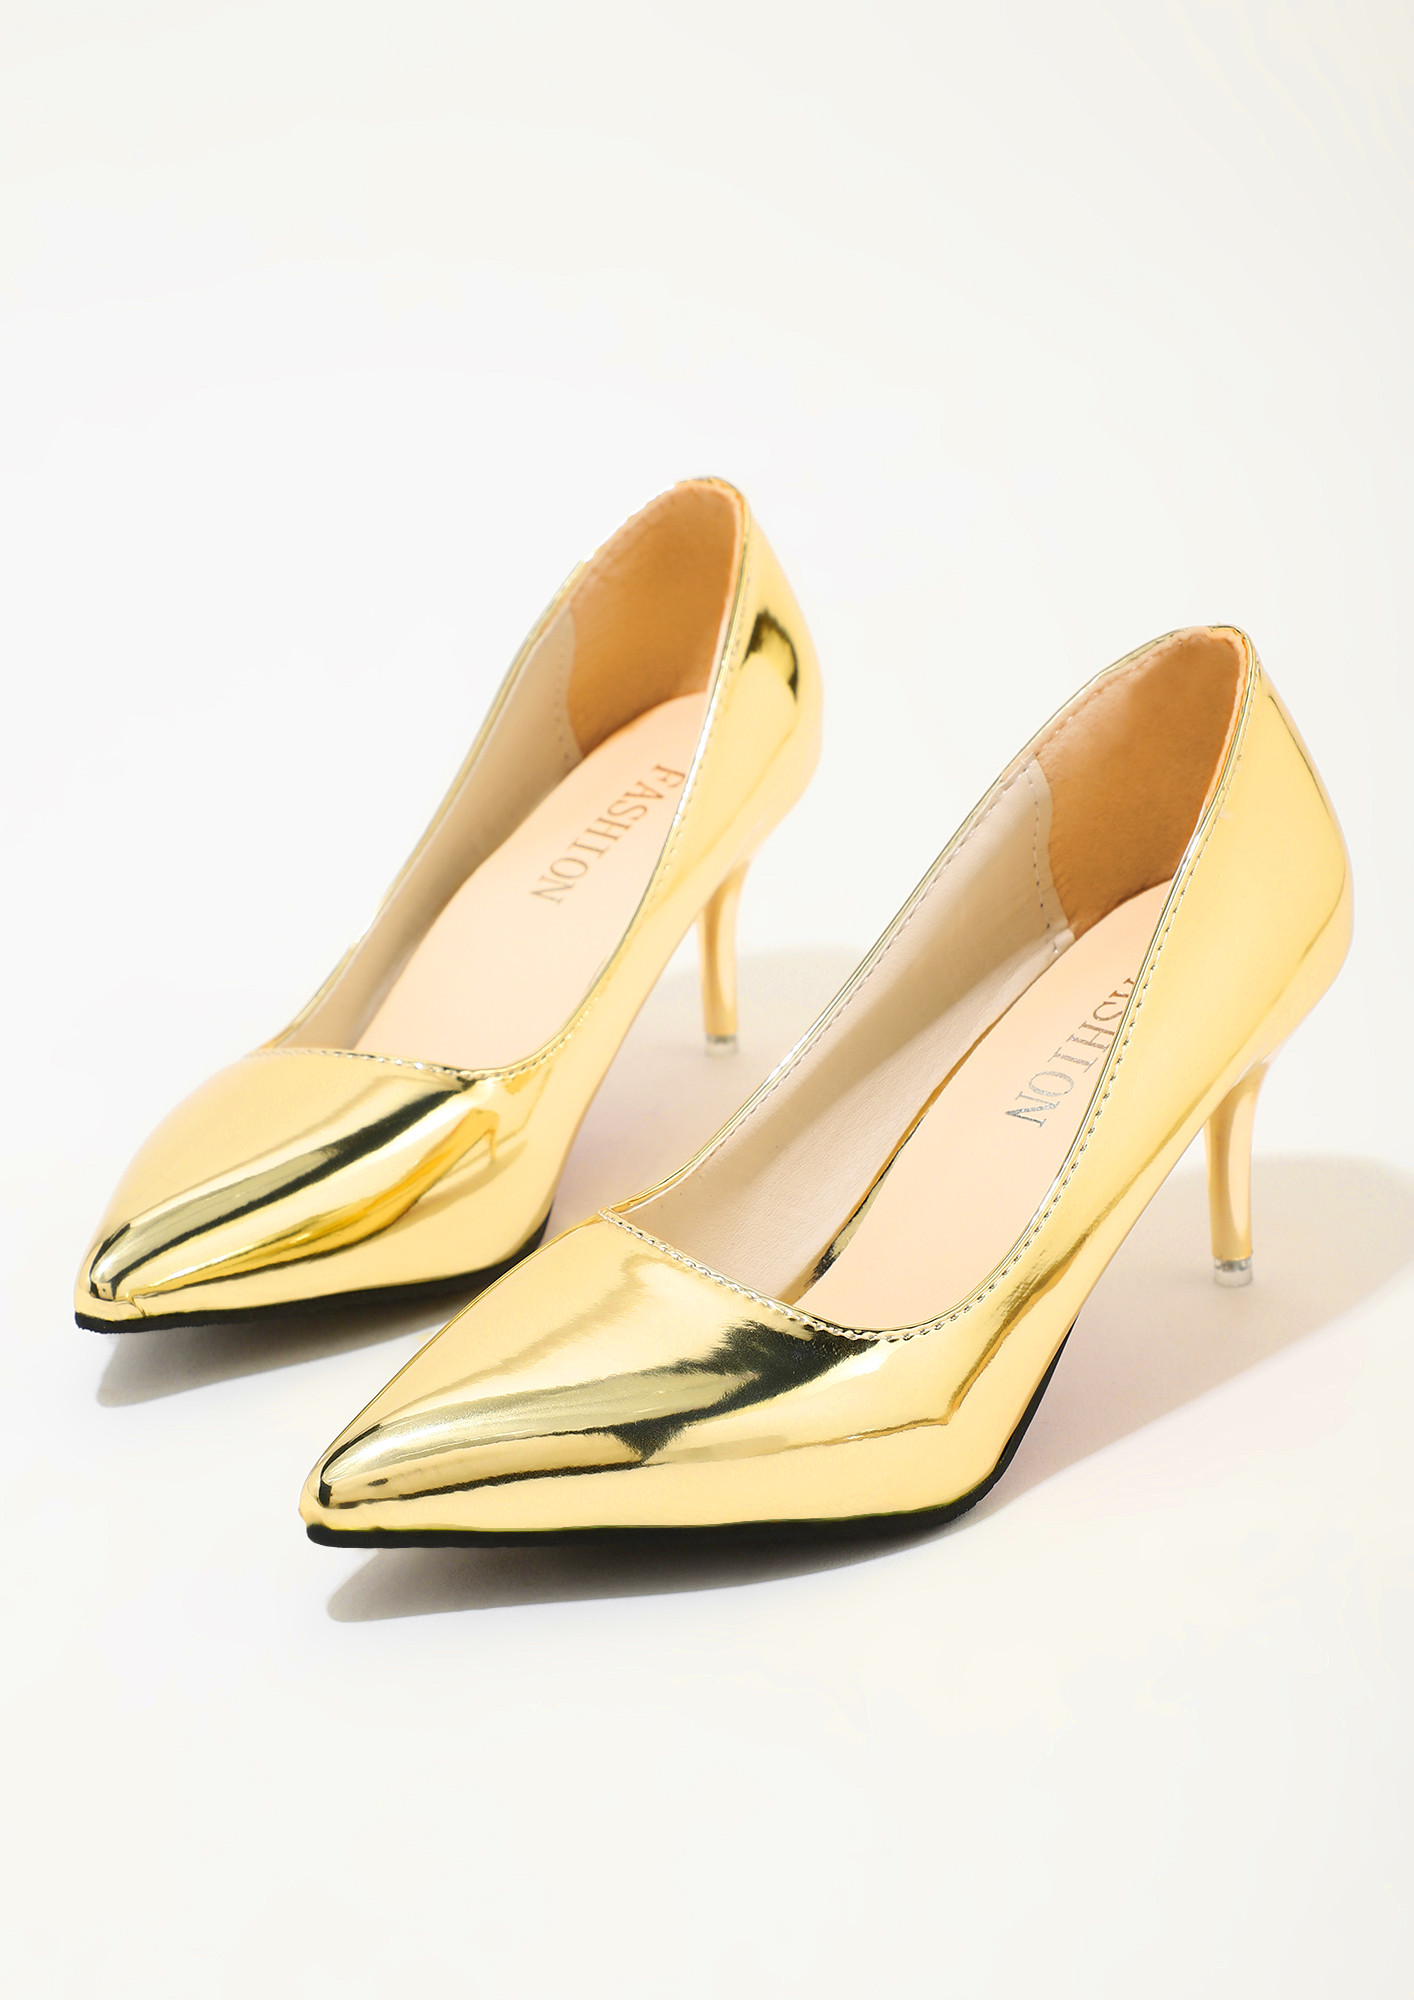 Gold Low Heel Shoes Women | Leather Wedding Stiletto | Leather High Heels  Pumps - 2023 - Aliexpress